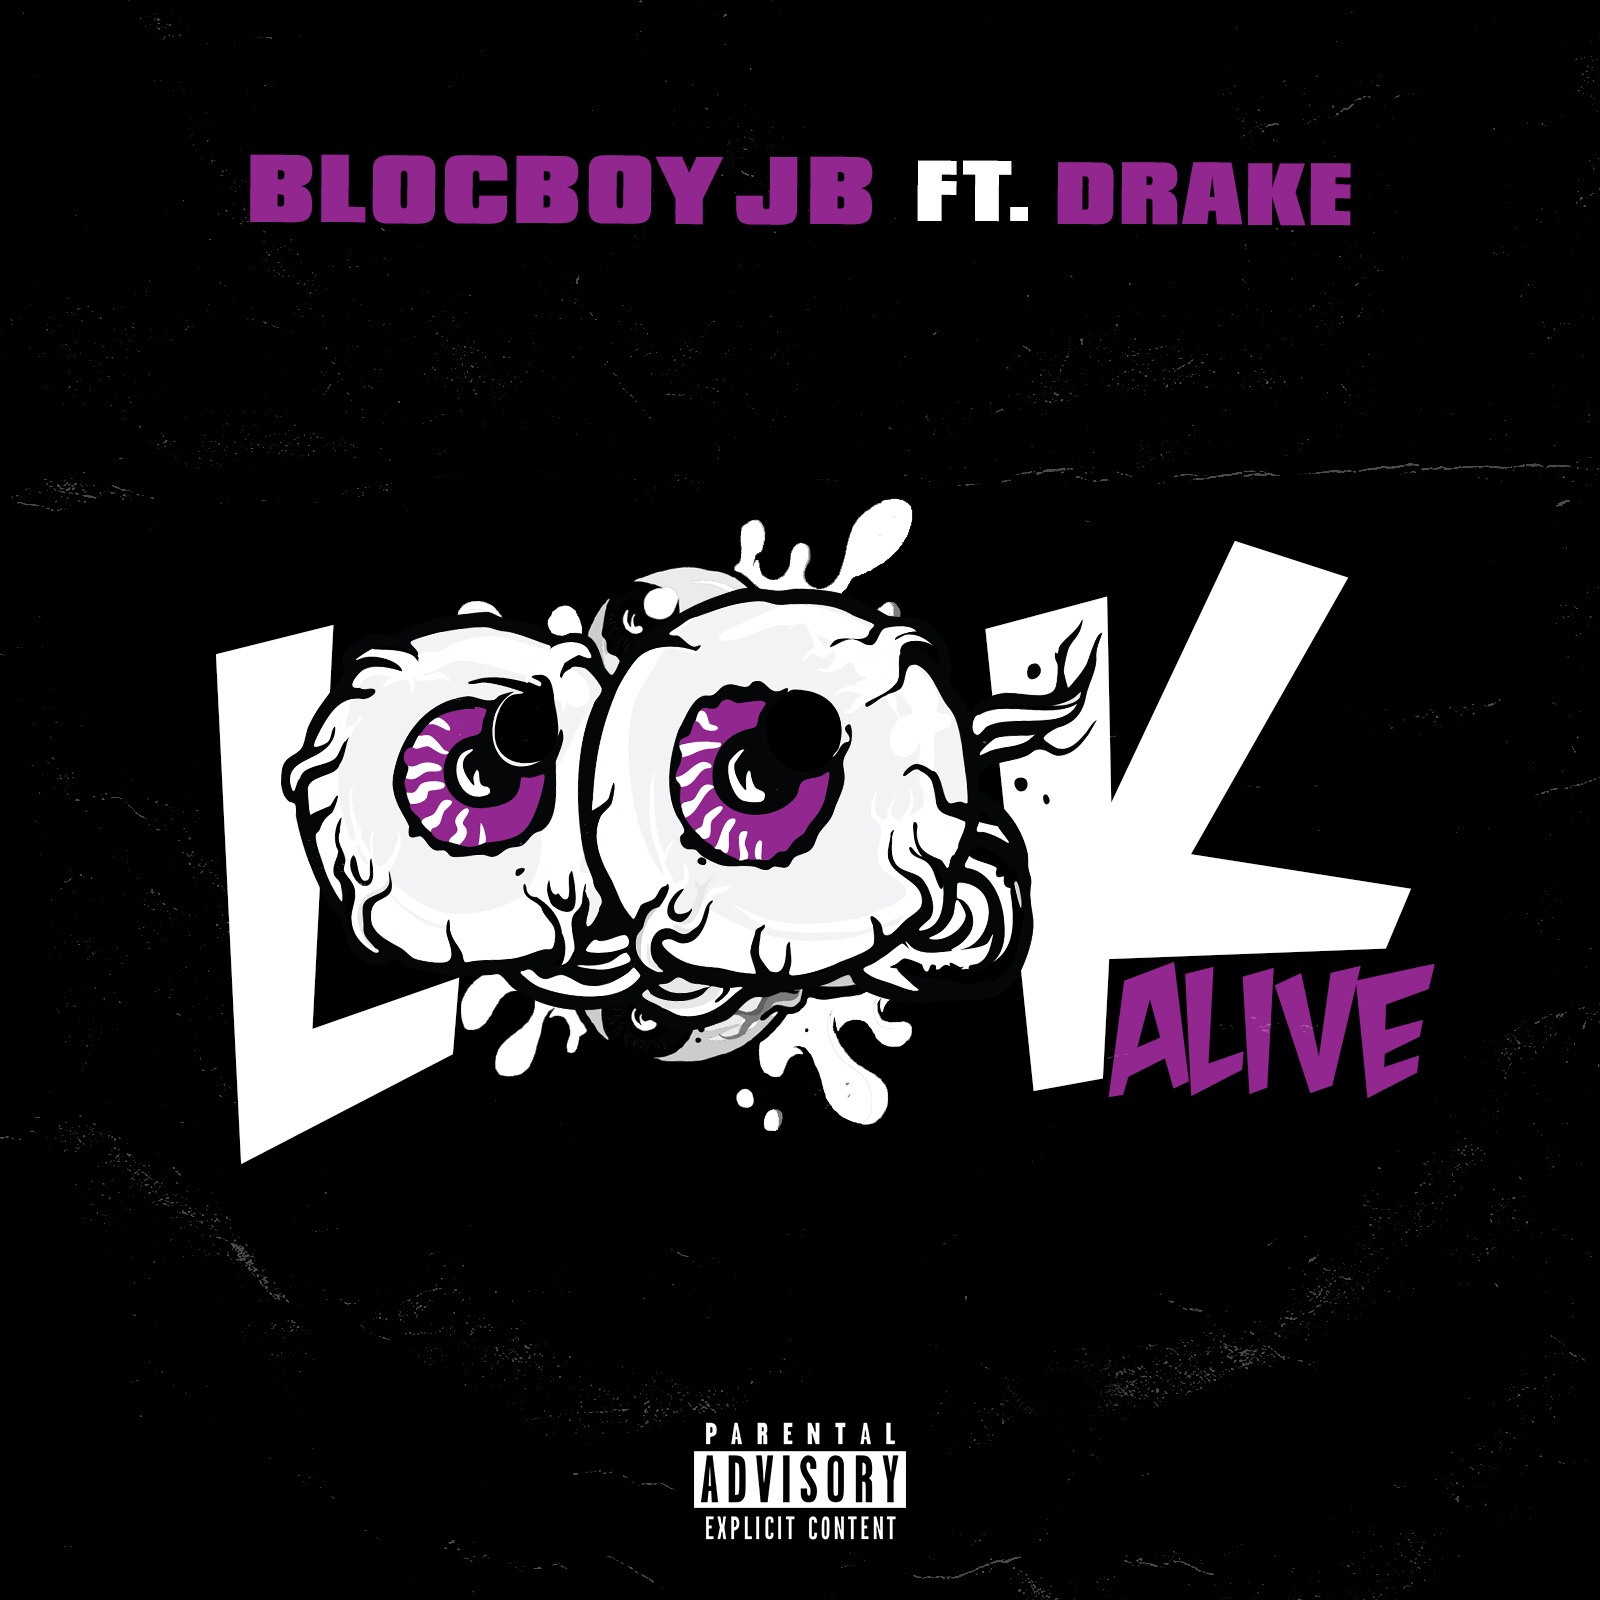 डाउनलोड करा BlocBoy JB "LOOK ALIVE" ft. Drake